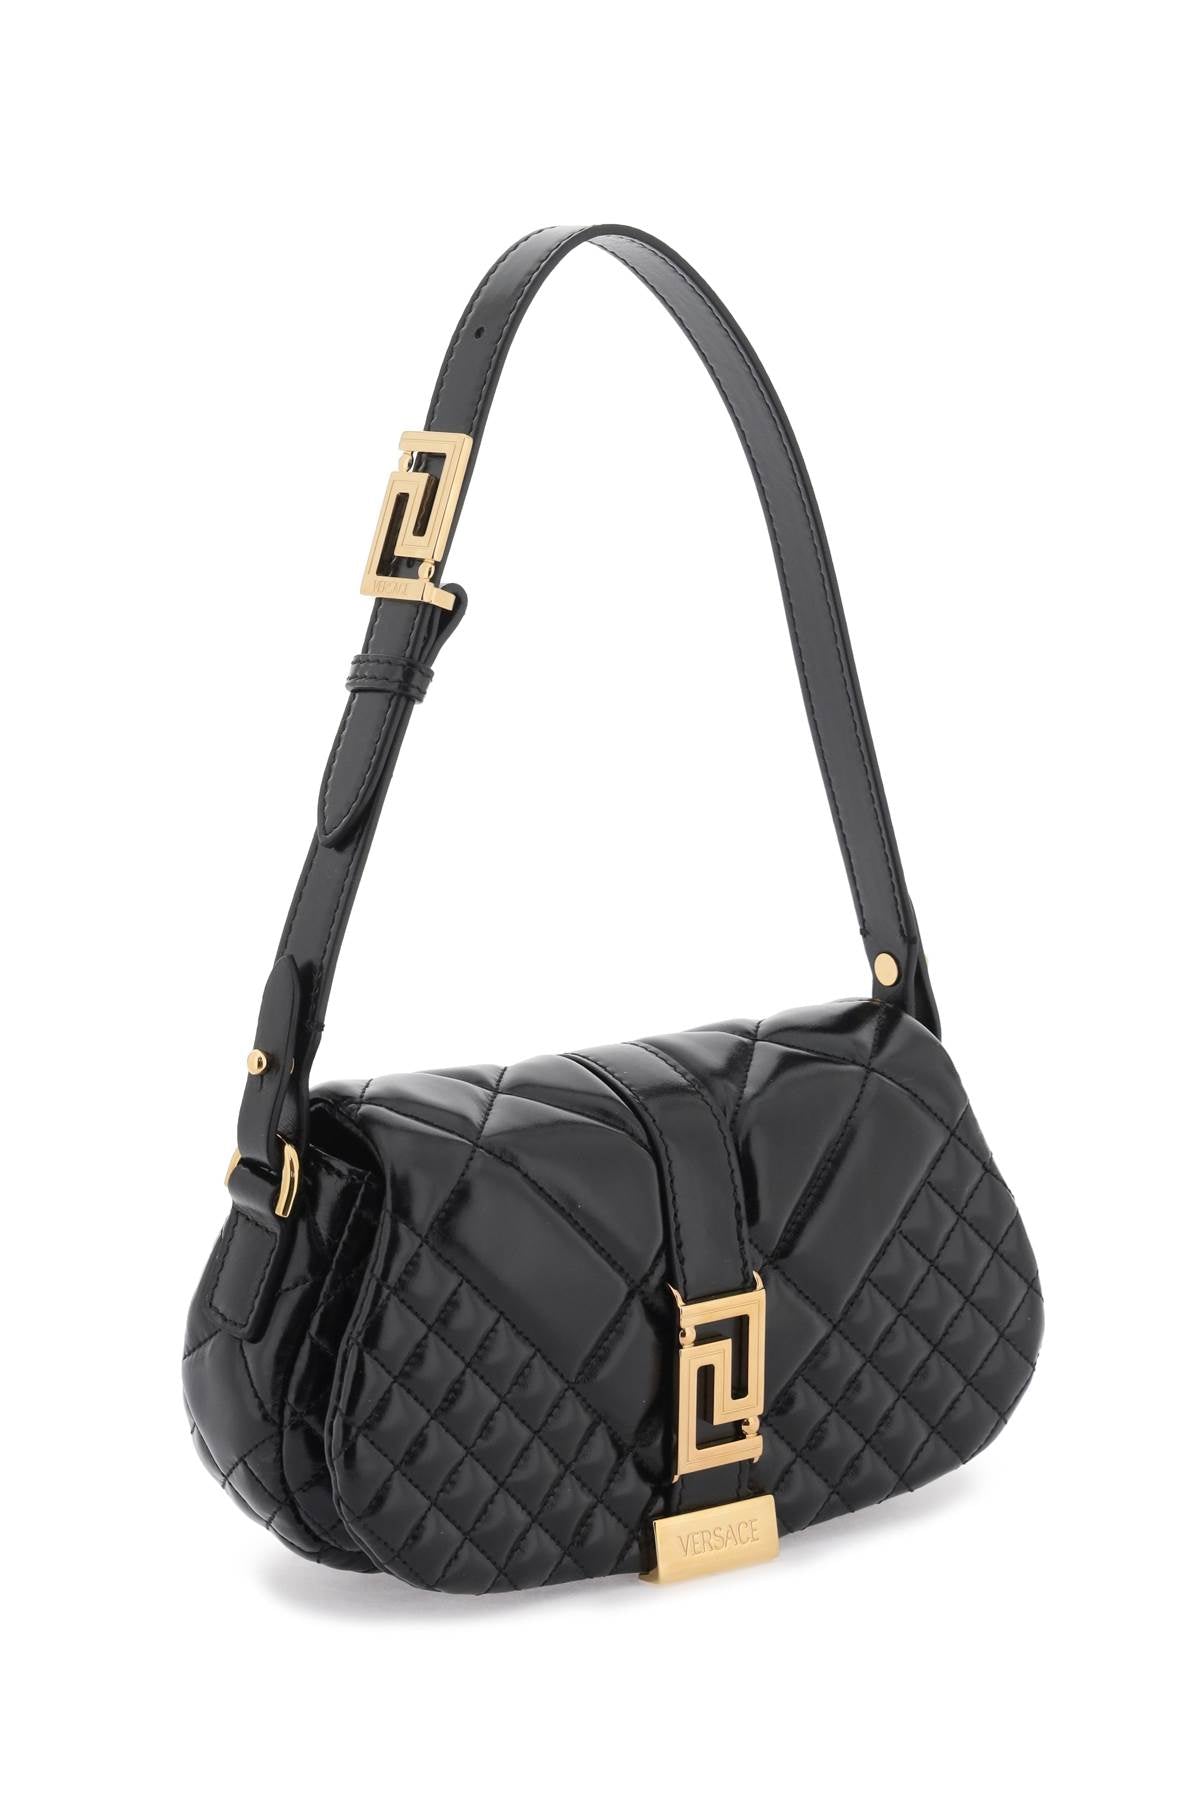 Versace 'greca goddess' mini bag-2